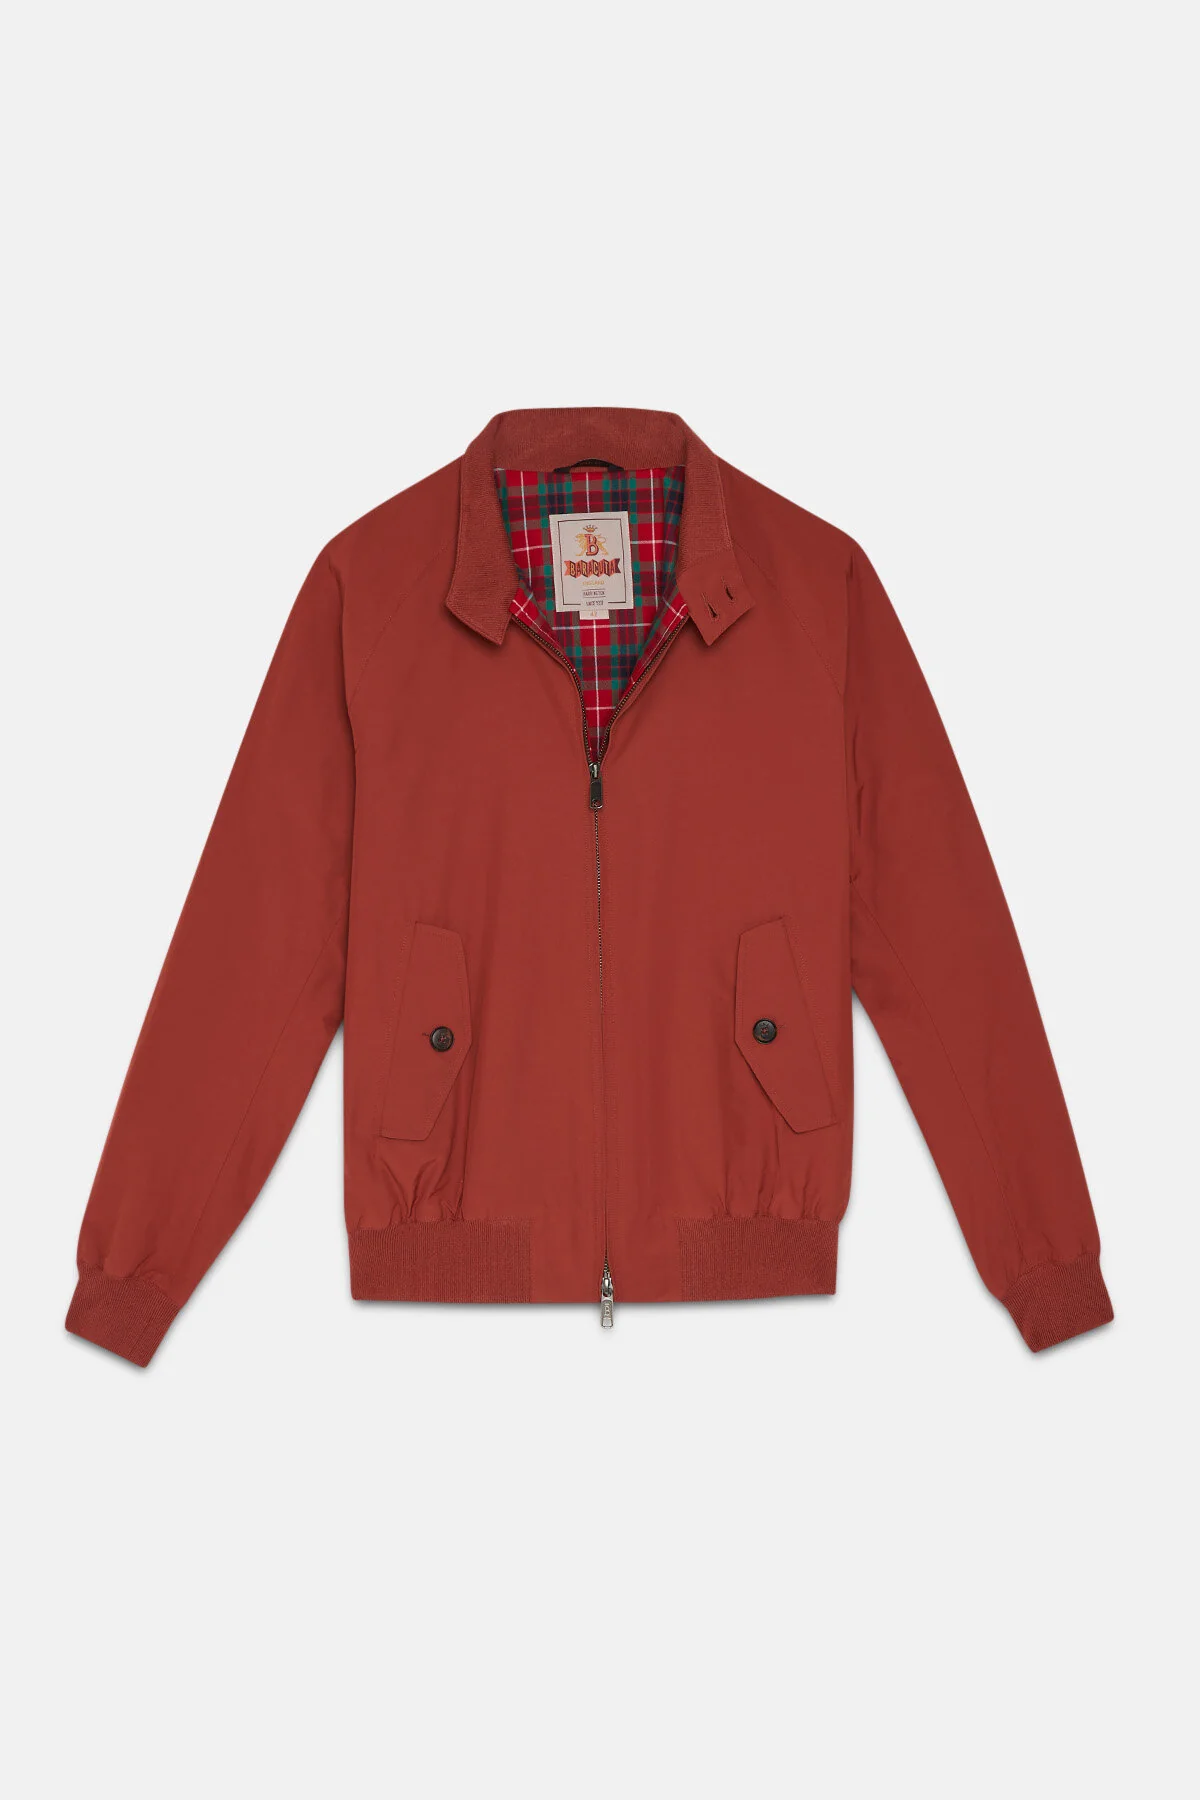 Baracuta  G9 Harrington Jacket in Red brick